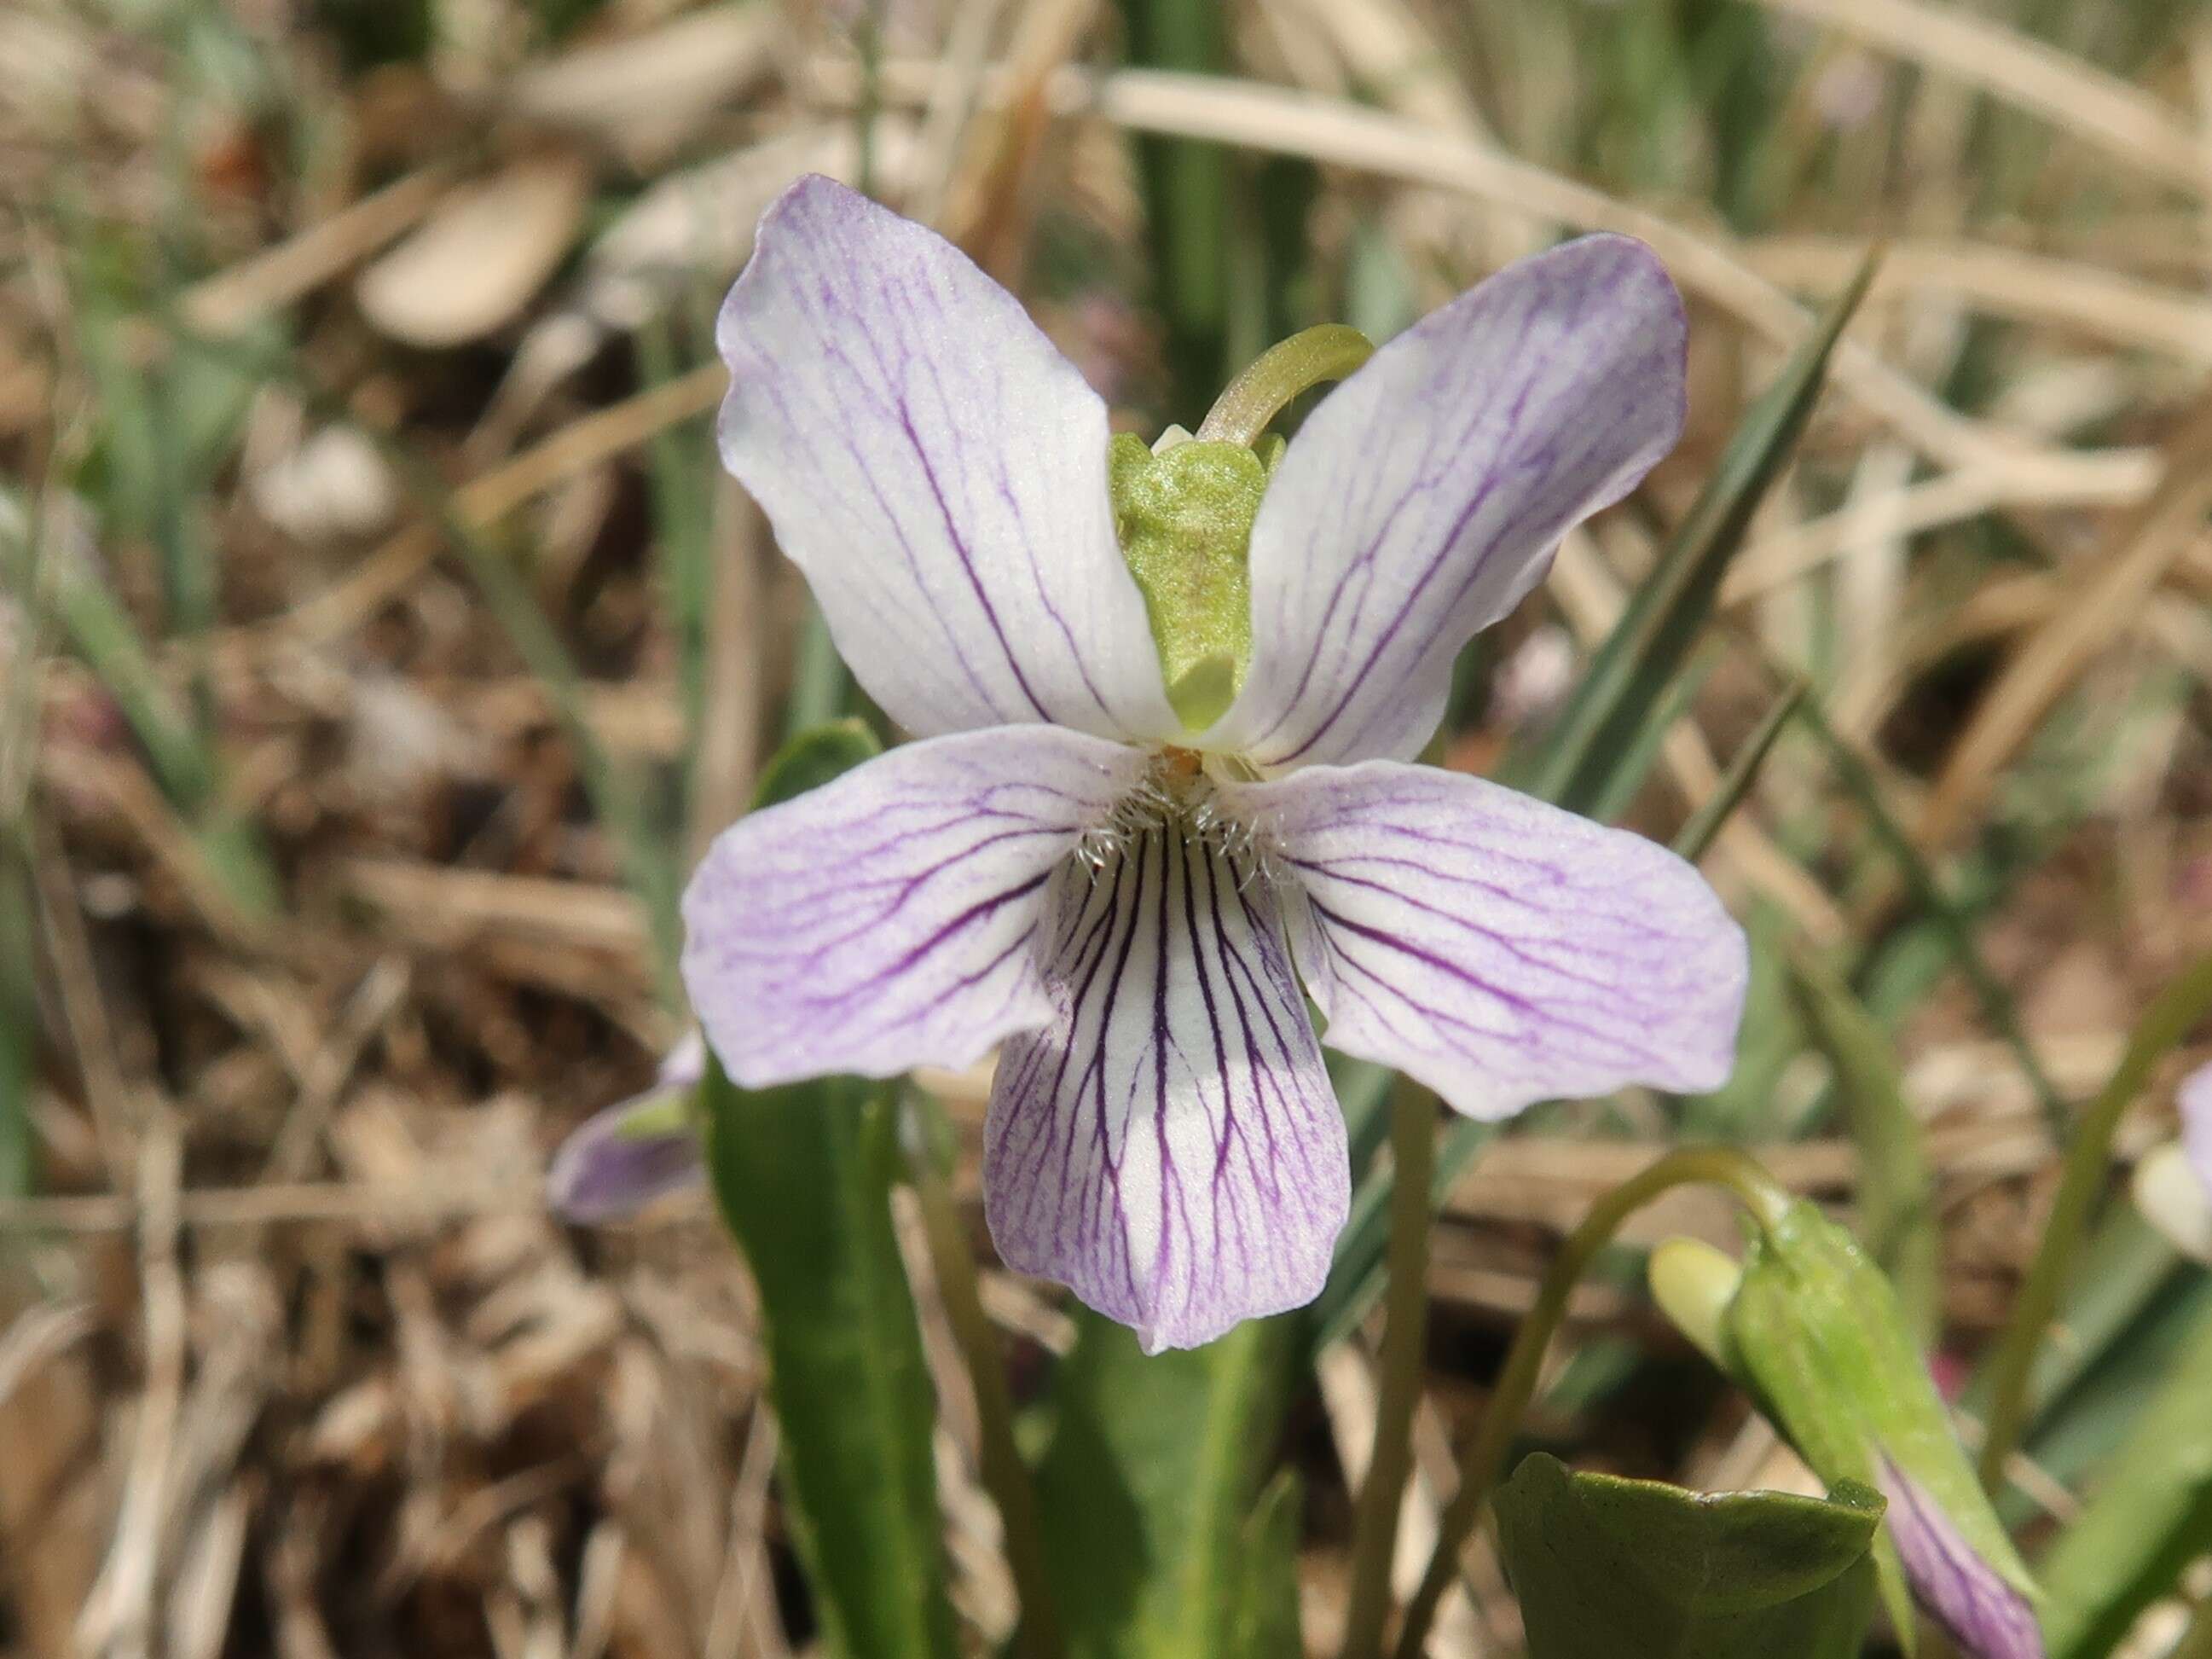 Image of Viola betonicifolia Smith